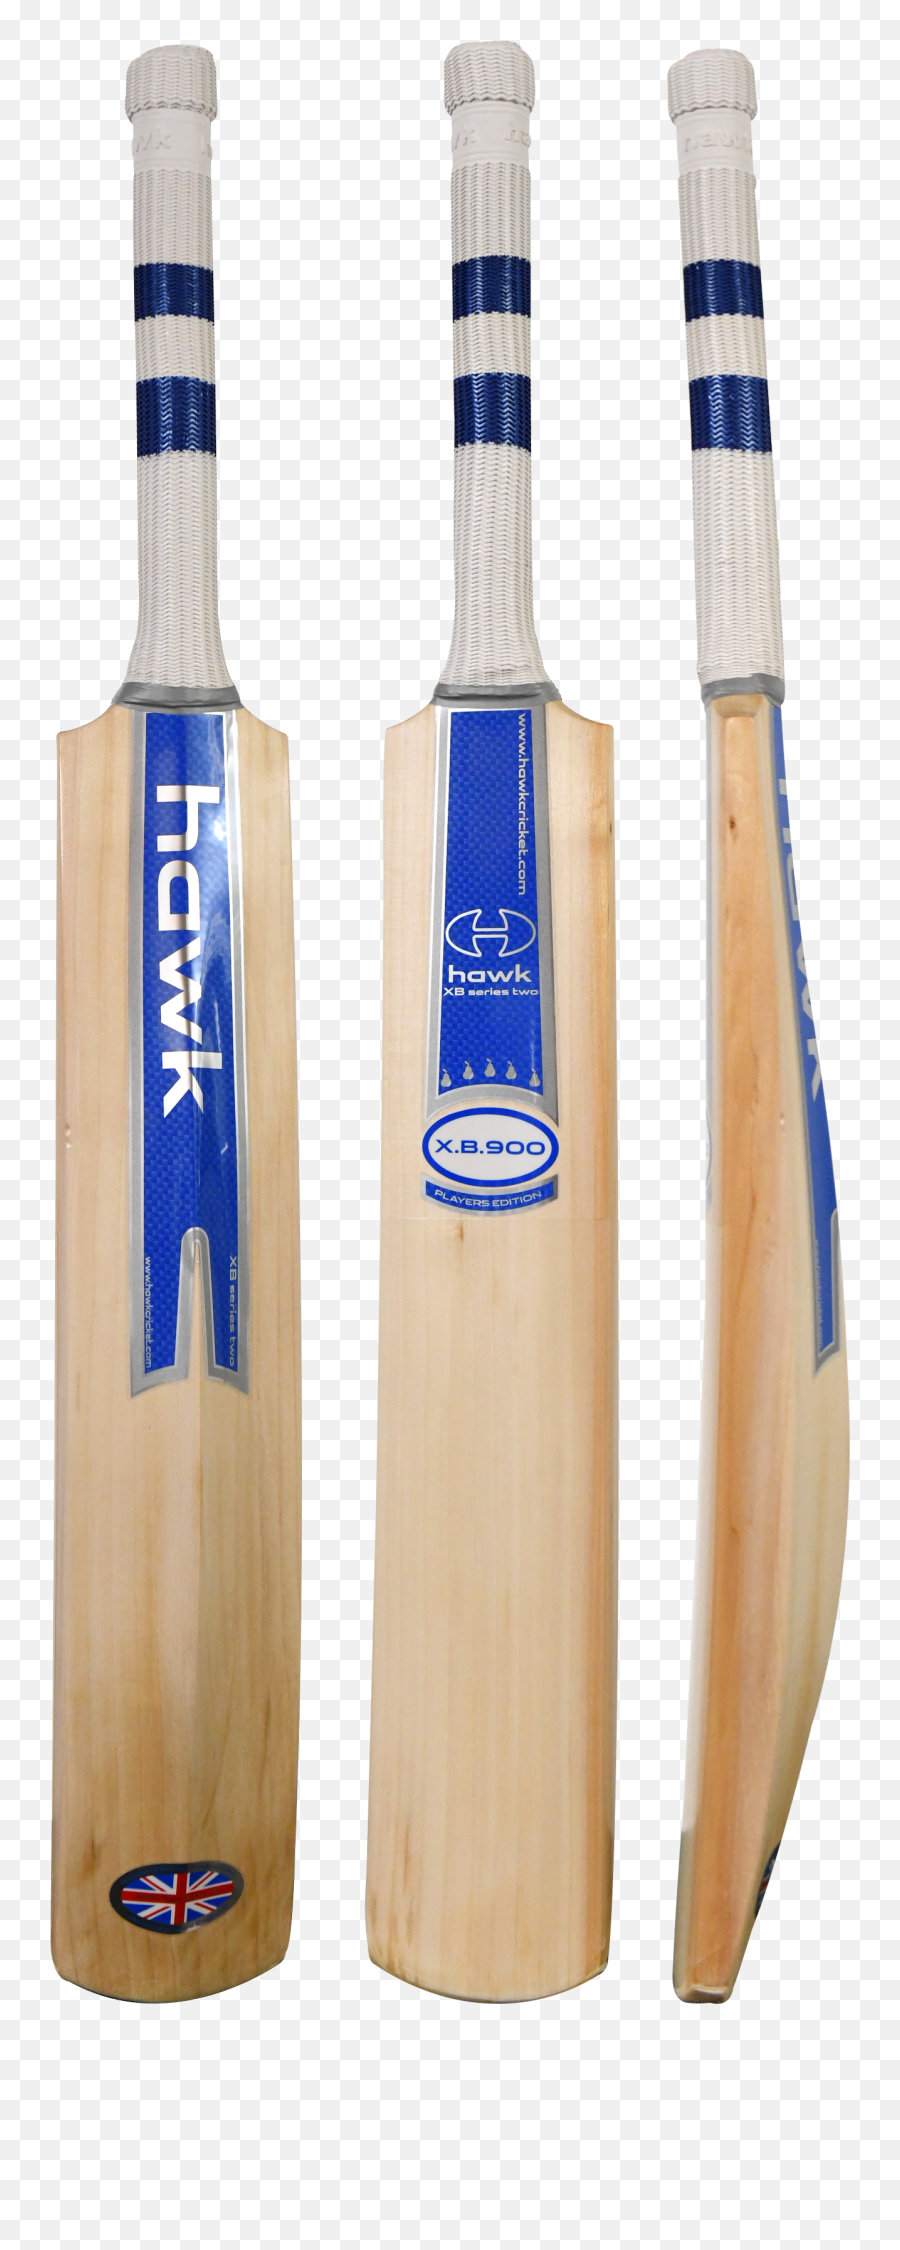 Xb900 Cricket Bat Series Two Players - Cricket Bat Png,Cricket Bat Png